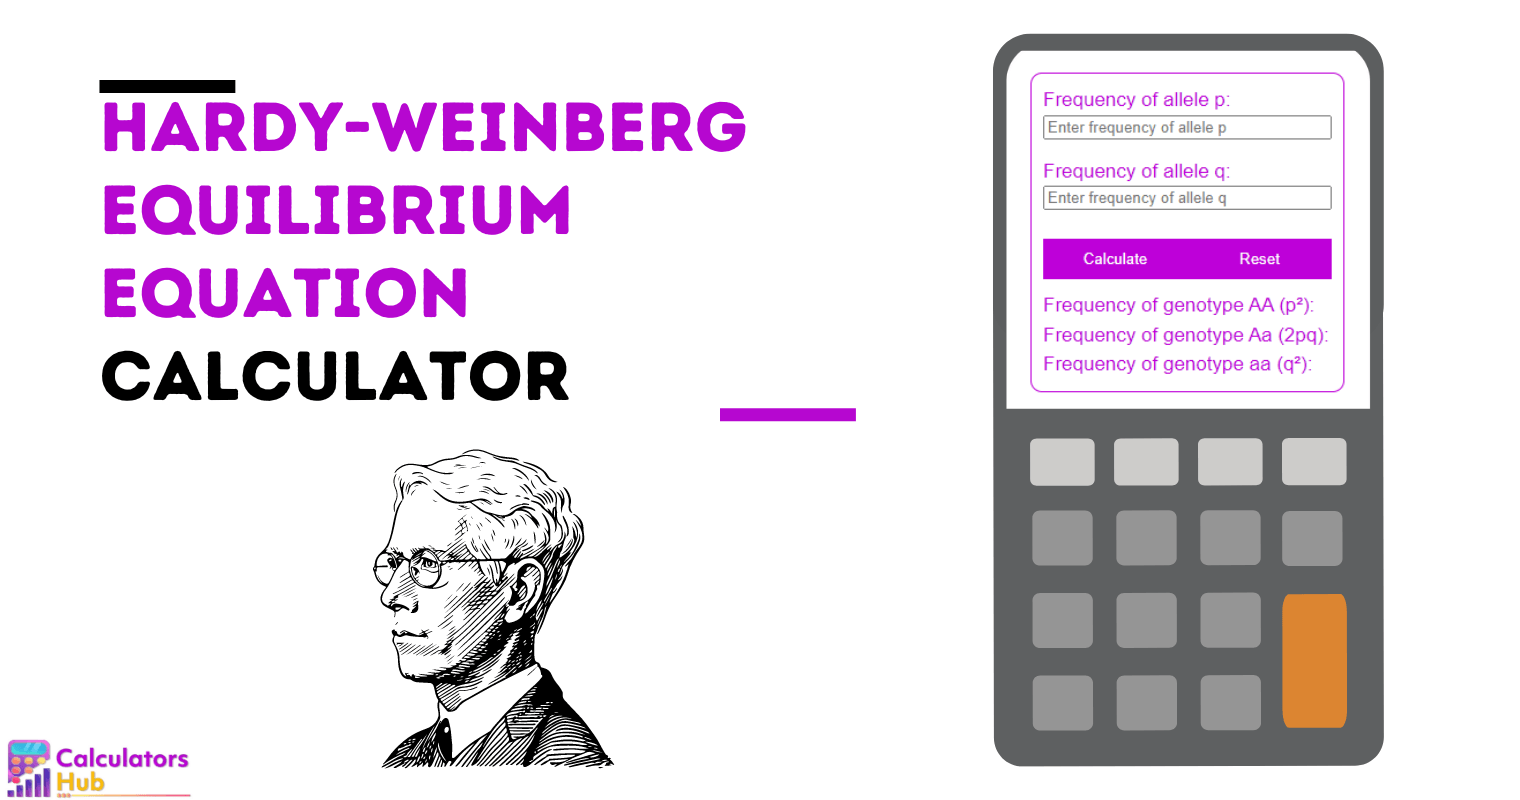 Hardy-Weinberg Equilibrium Equation Calculator